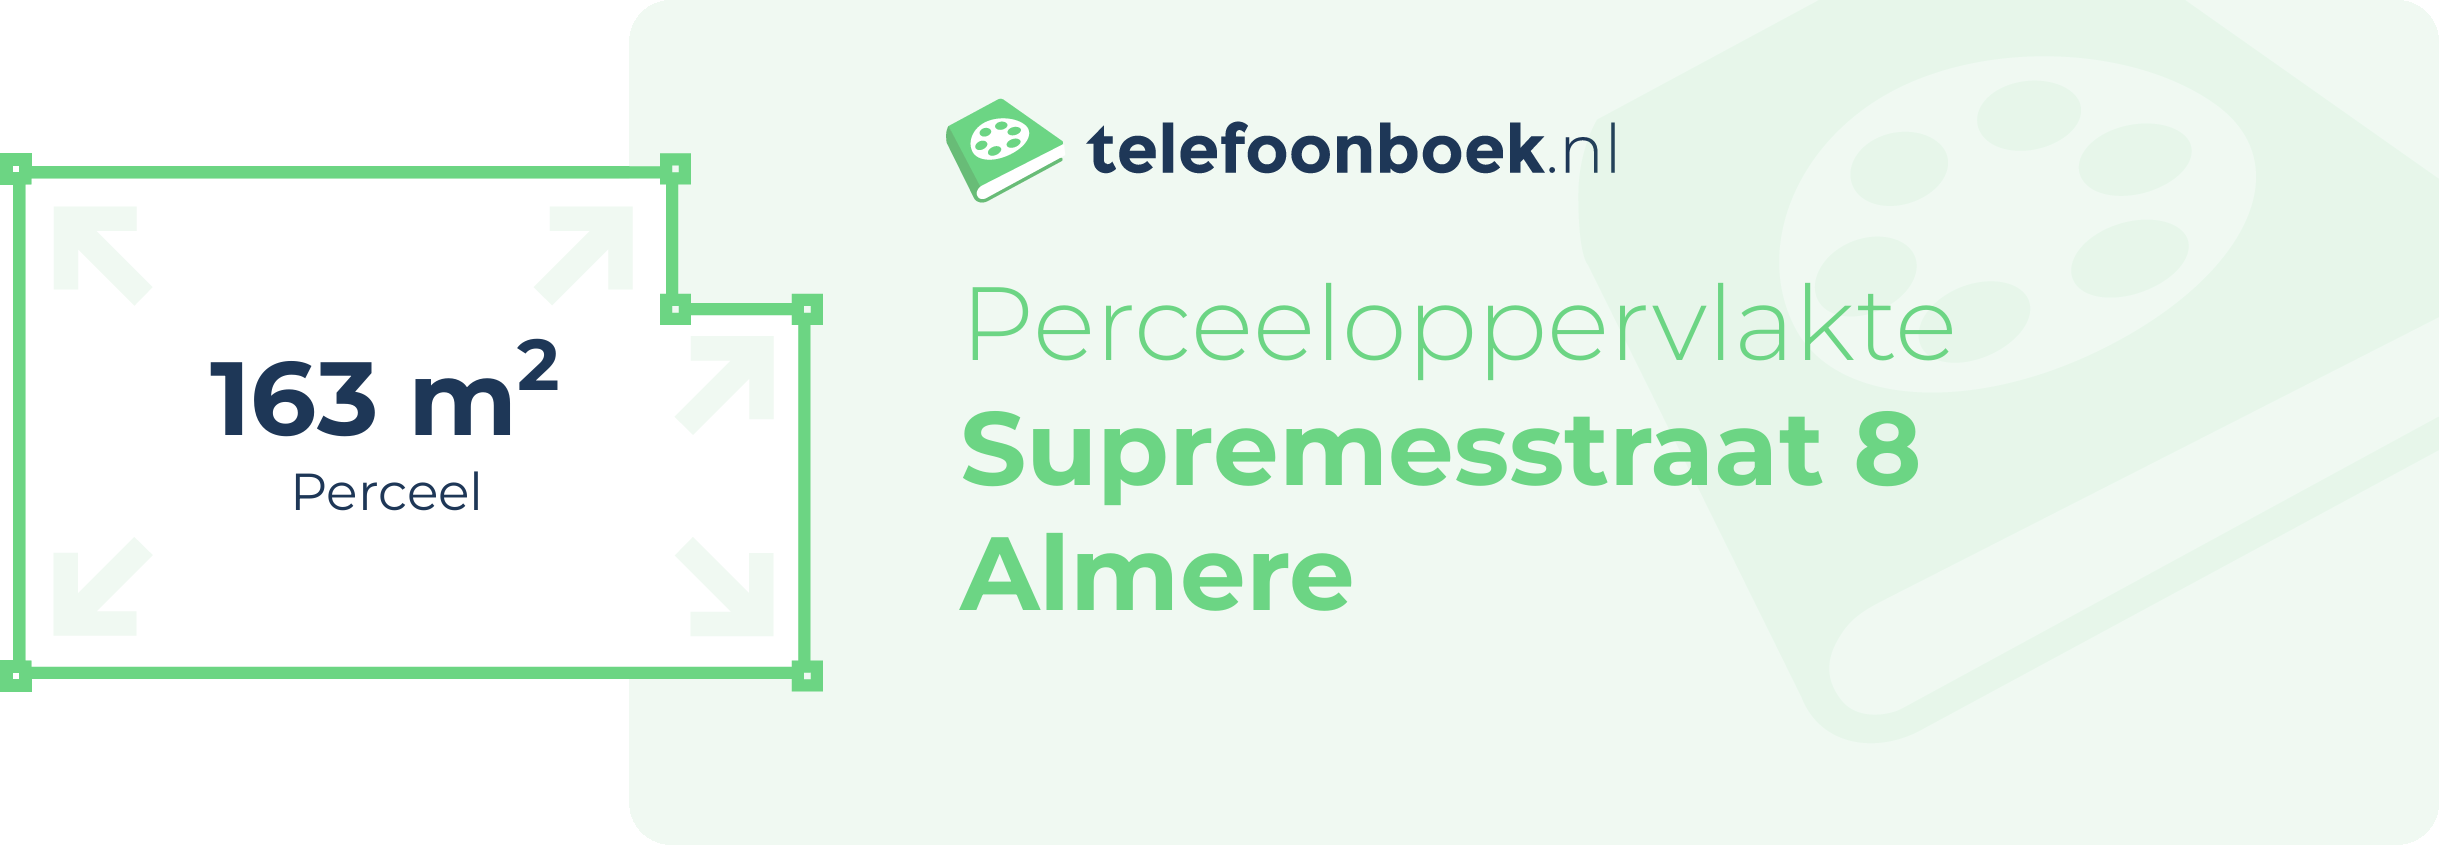 Perceeloppervlakte Supremesstraat 8 Almere